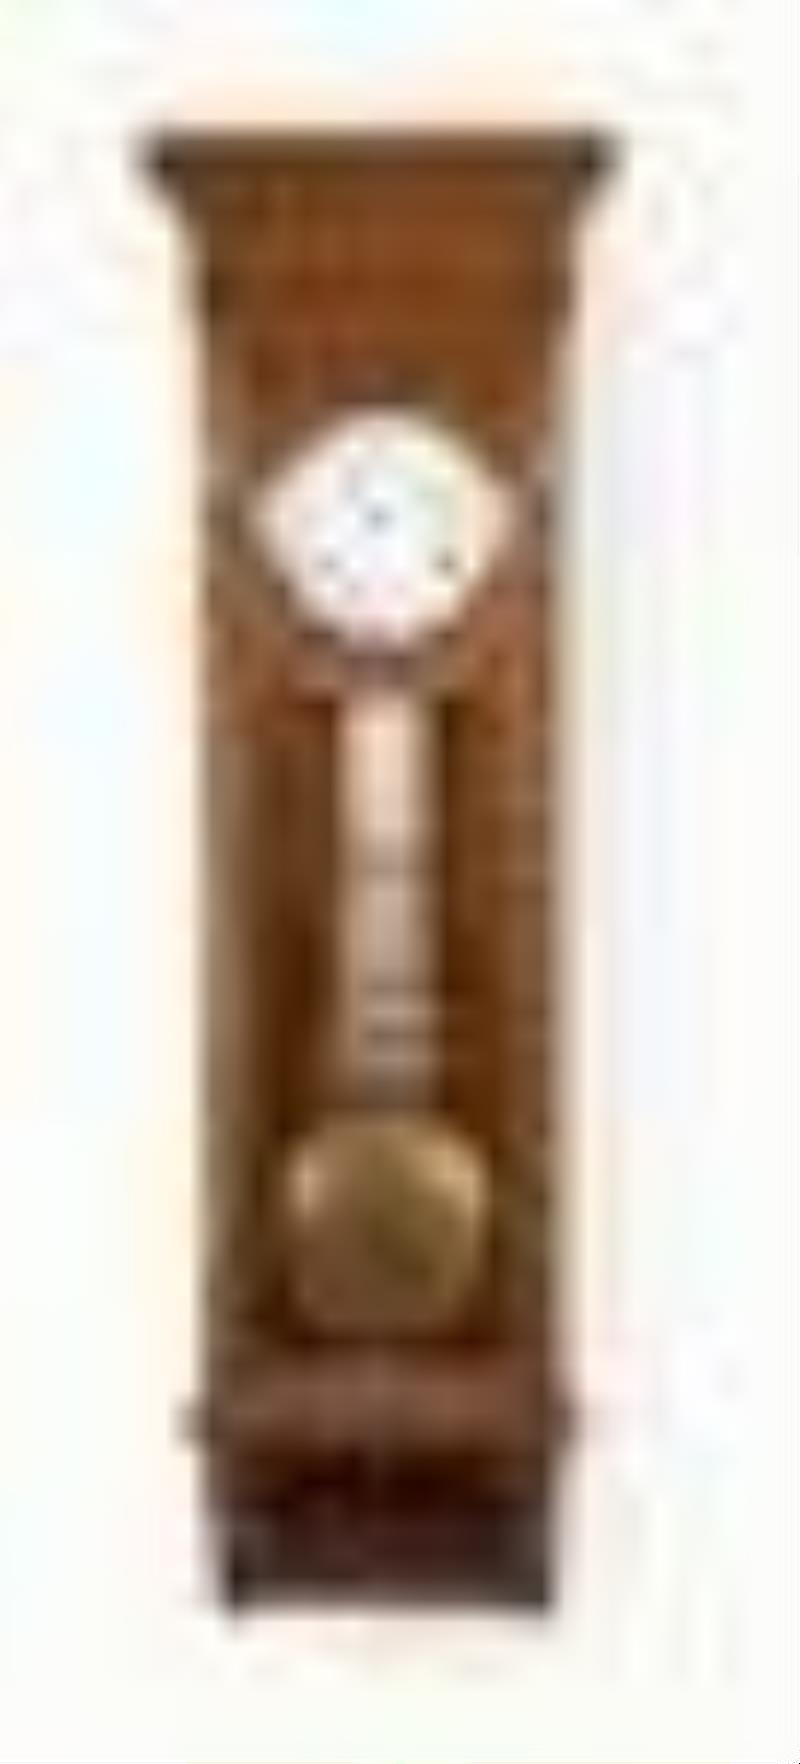 Waterbury Clock Co. Regulator No 7 hanging jeweler's regulator clock